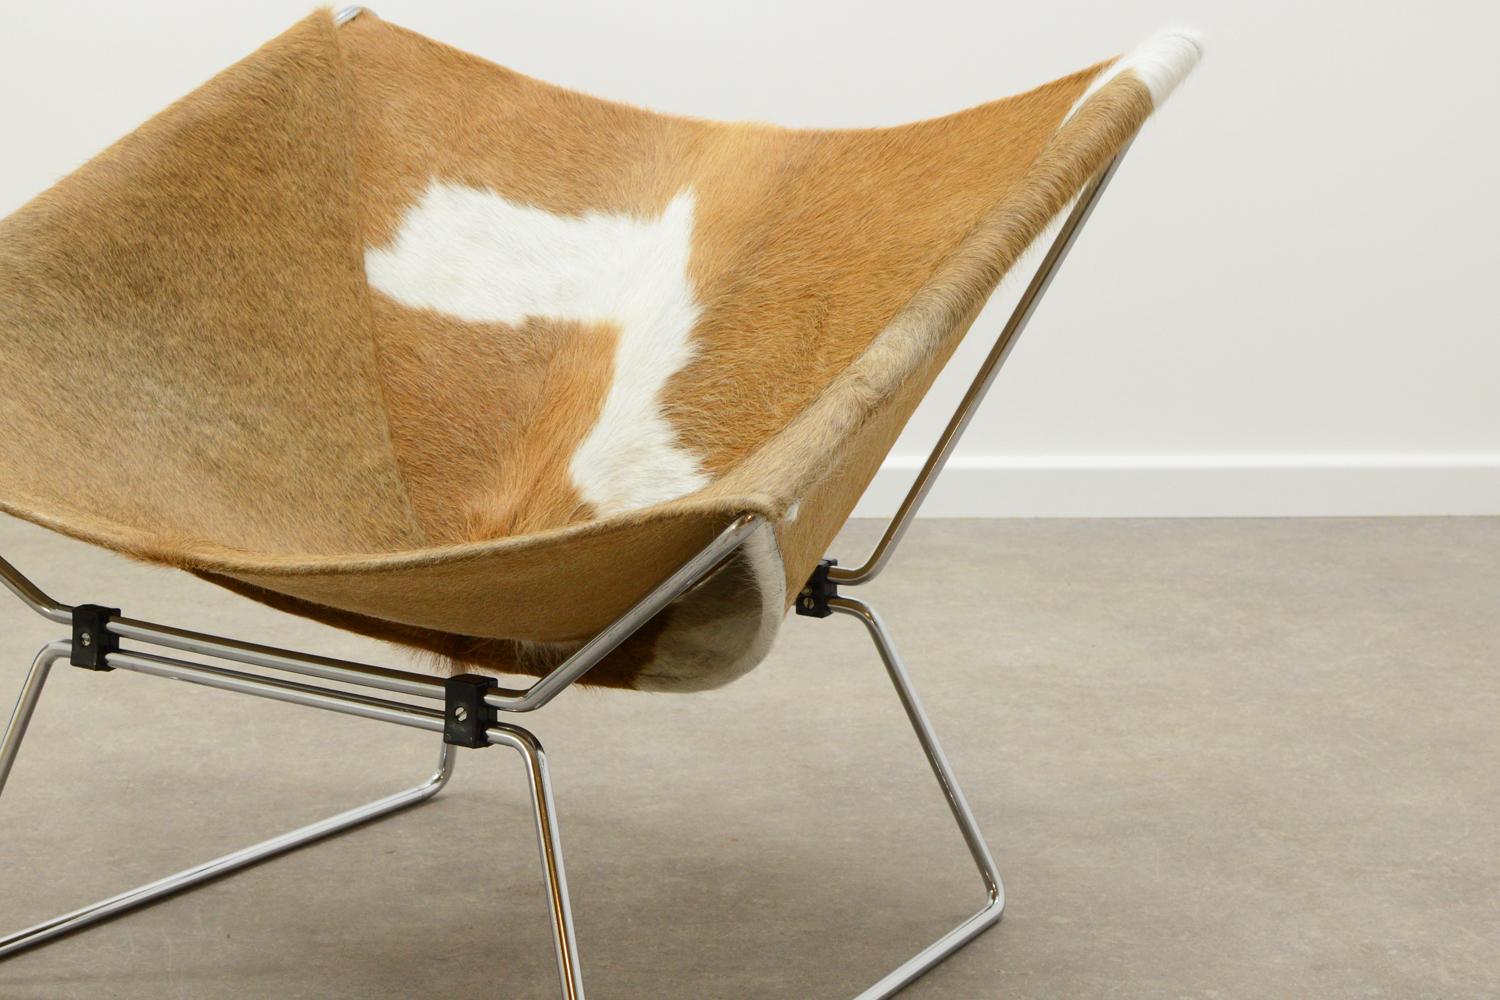 20th Century AP14 Lounge Chair “Anneau” by Pierre Paulin for AP Originals 50s